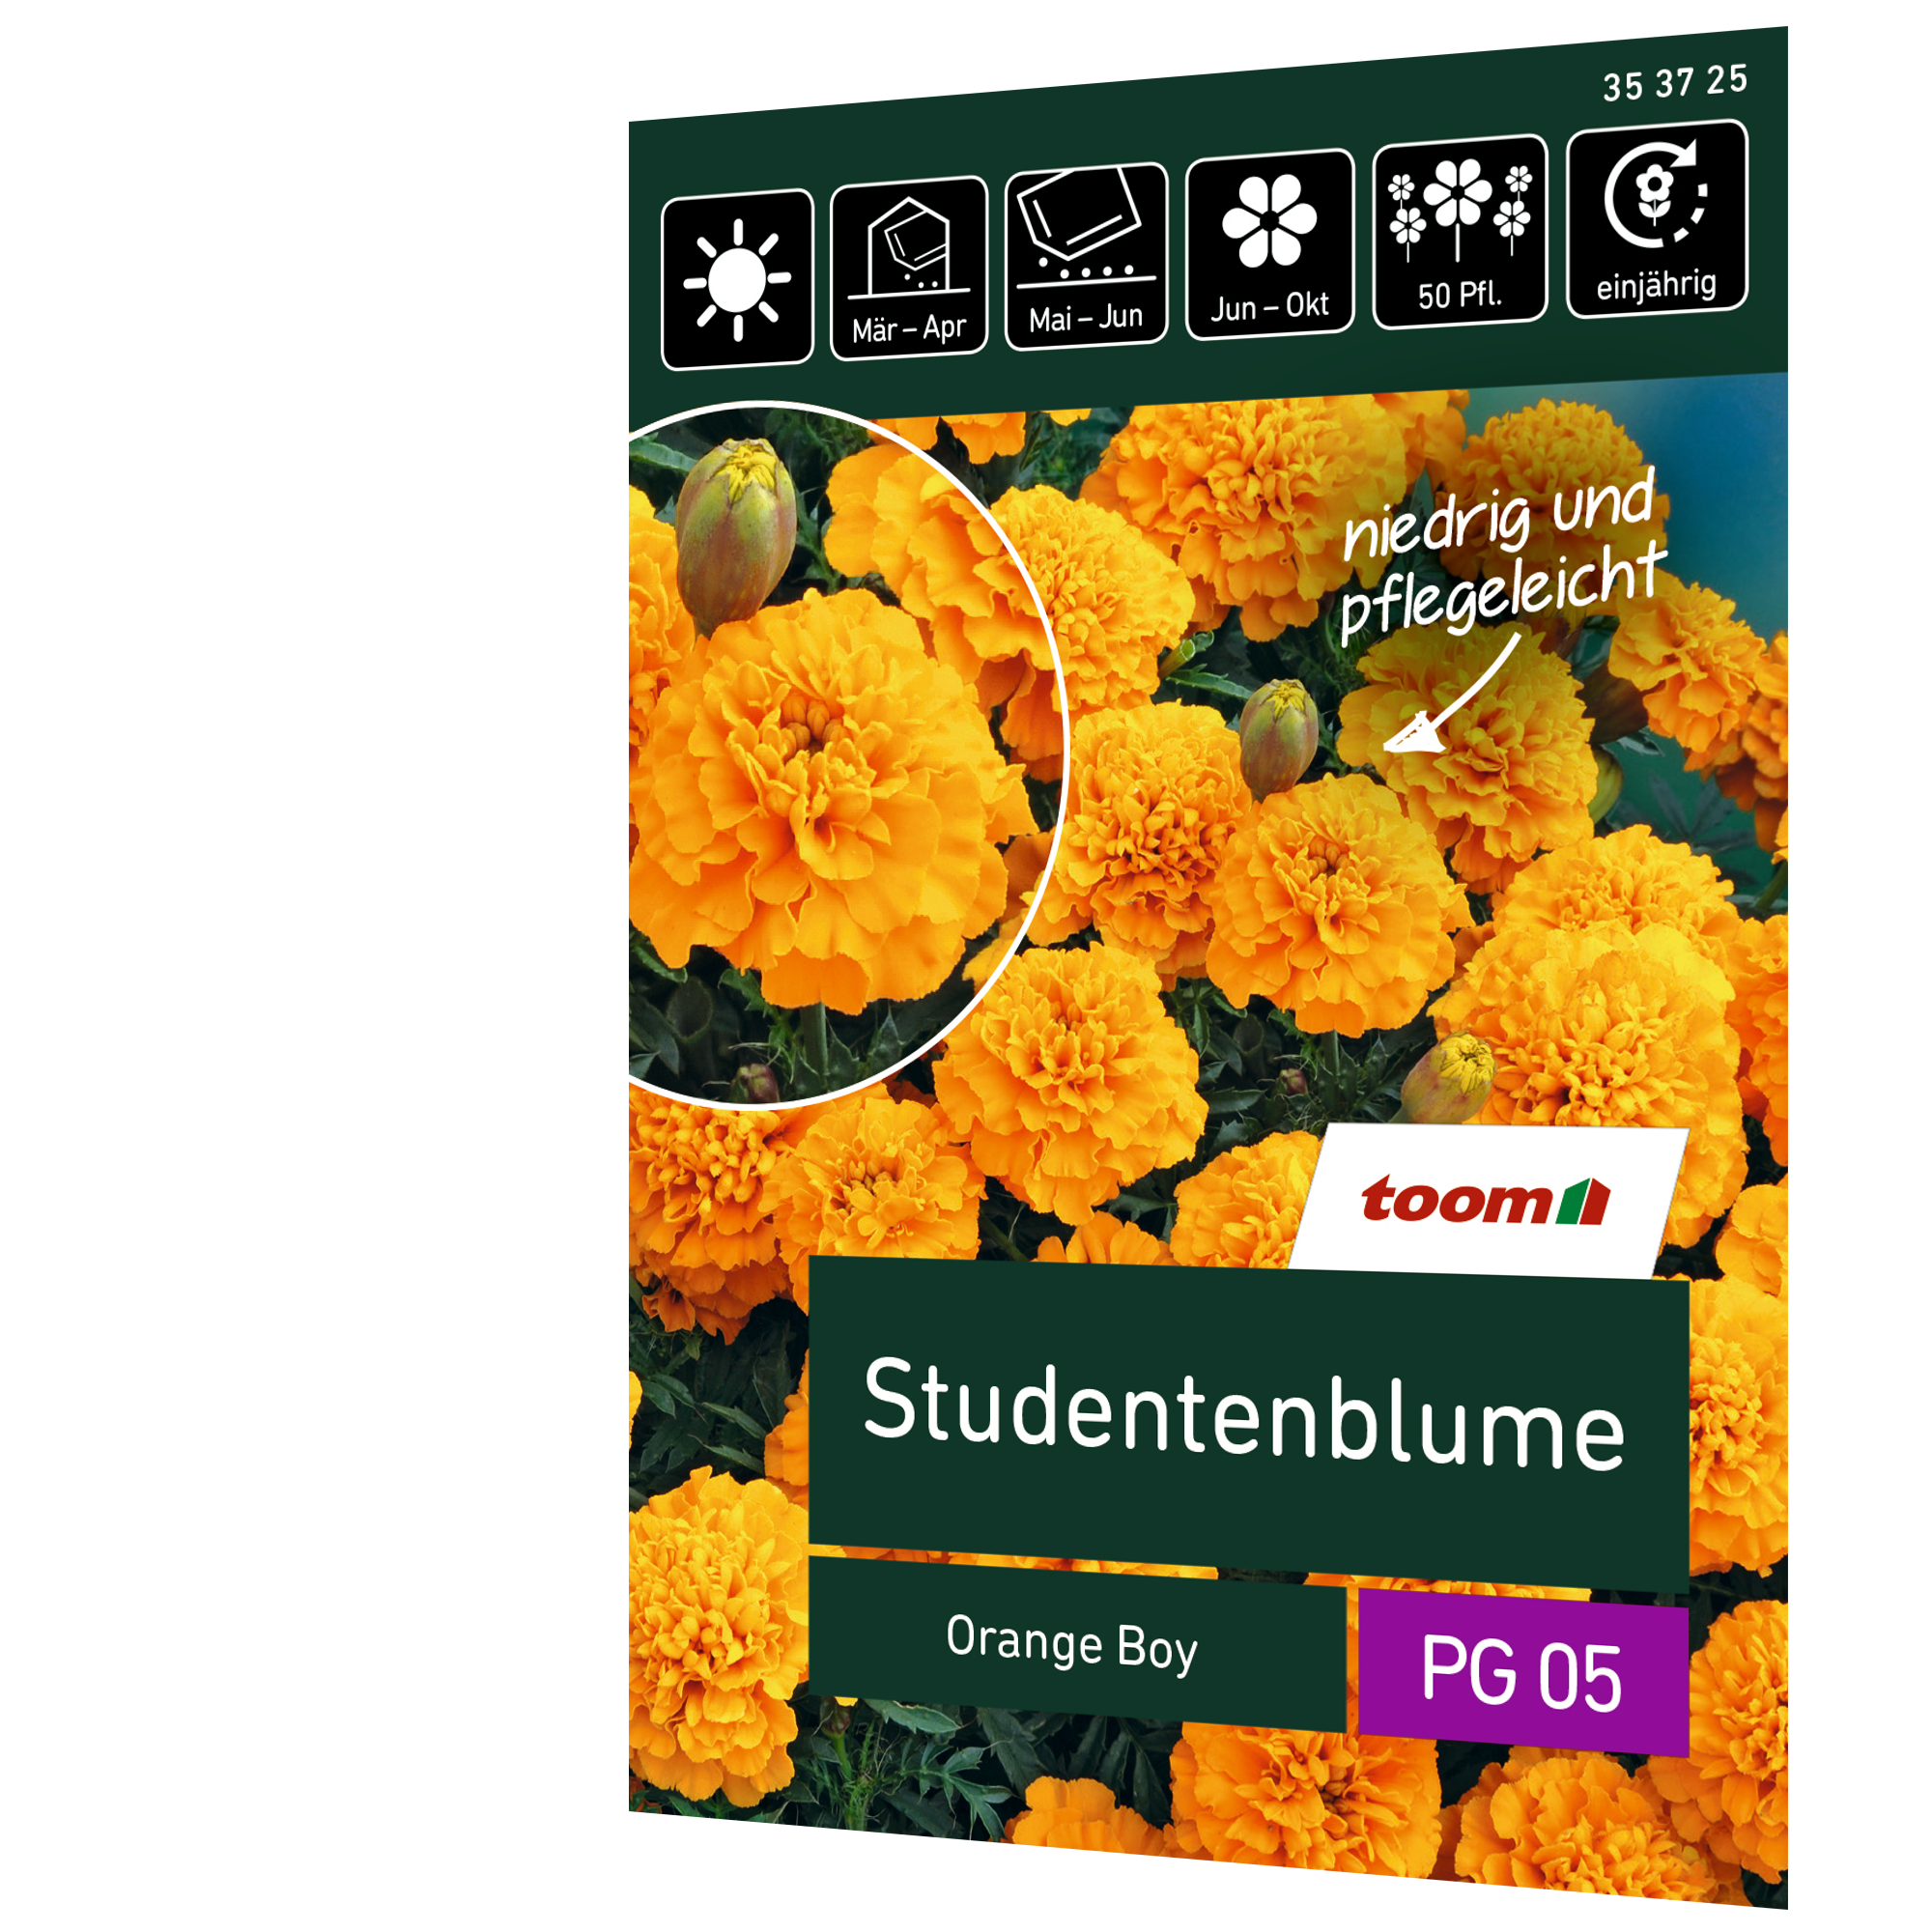 Studentenblume 'Orange Boy' + product picture